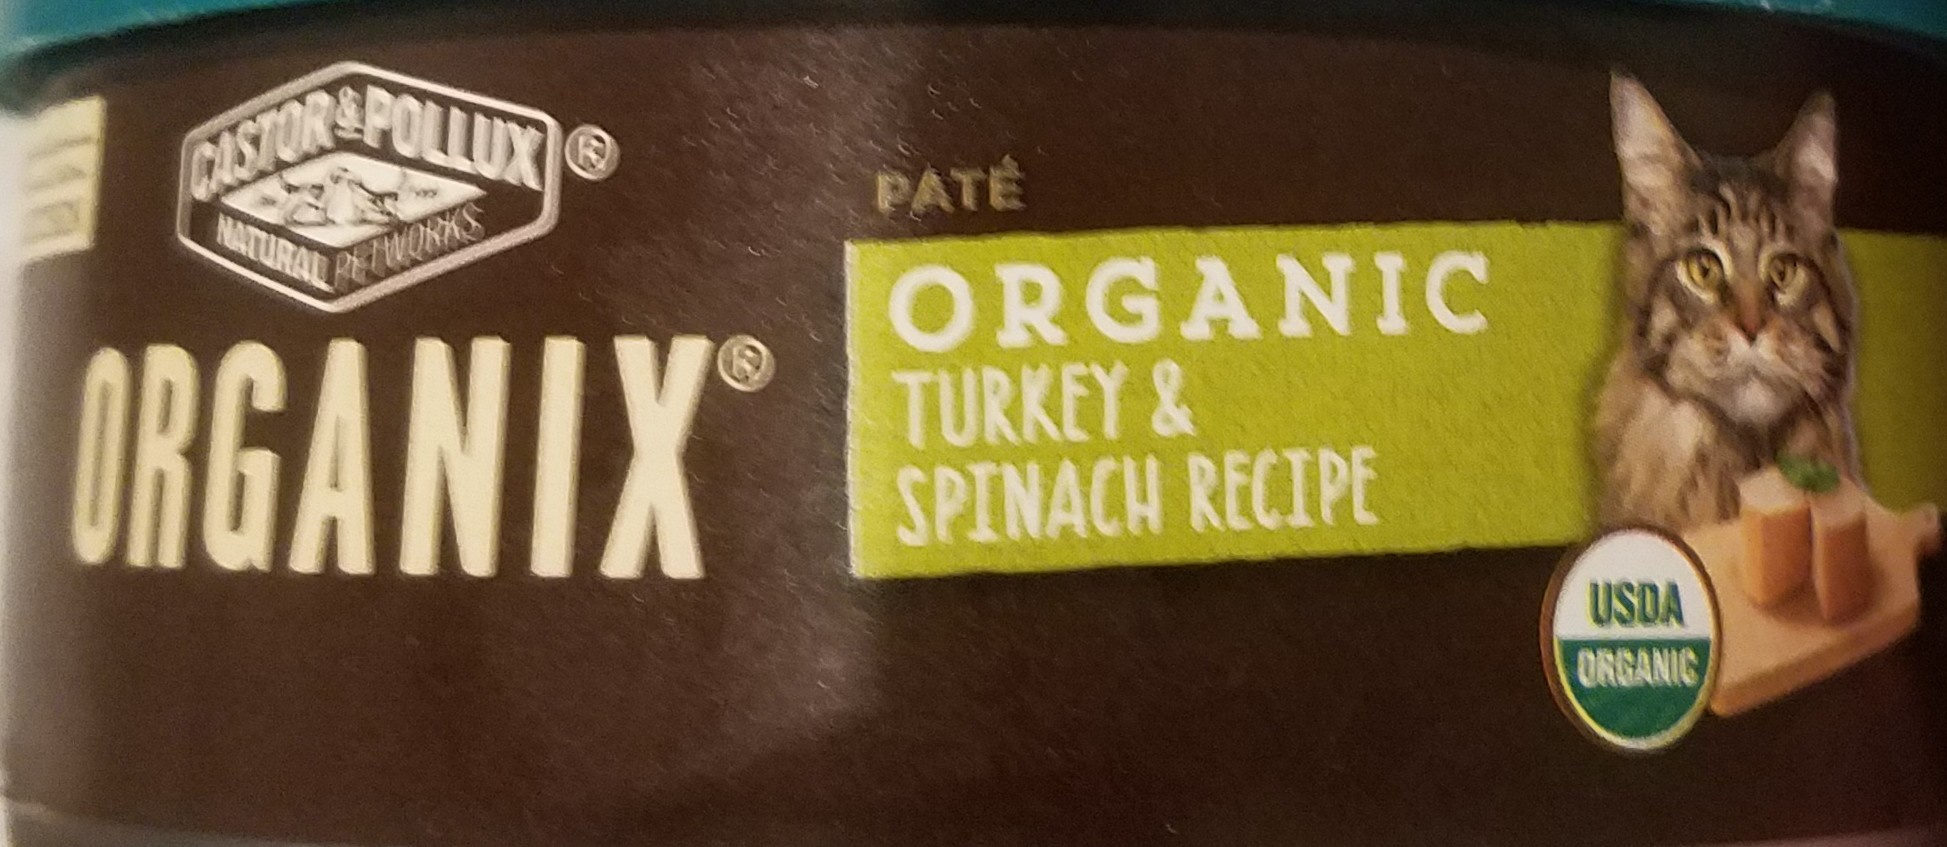 Turkey & Spinach Recipe Paté - Product - en